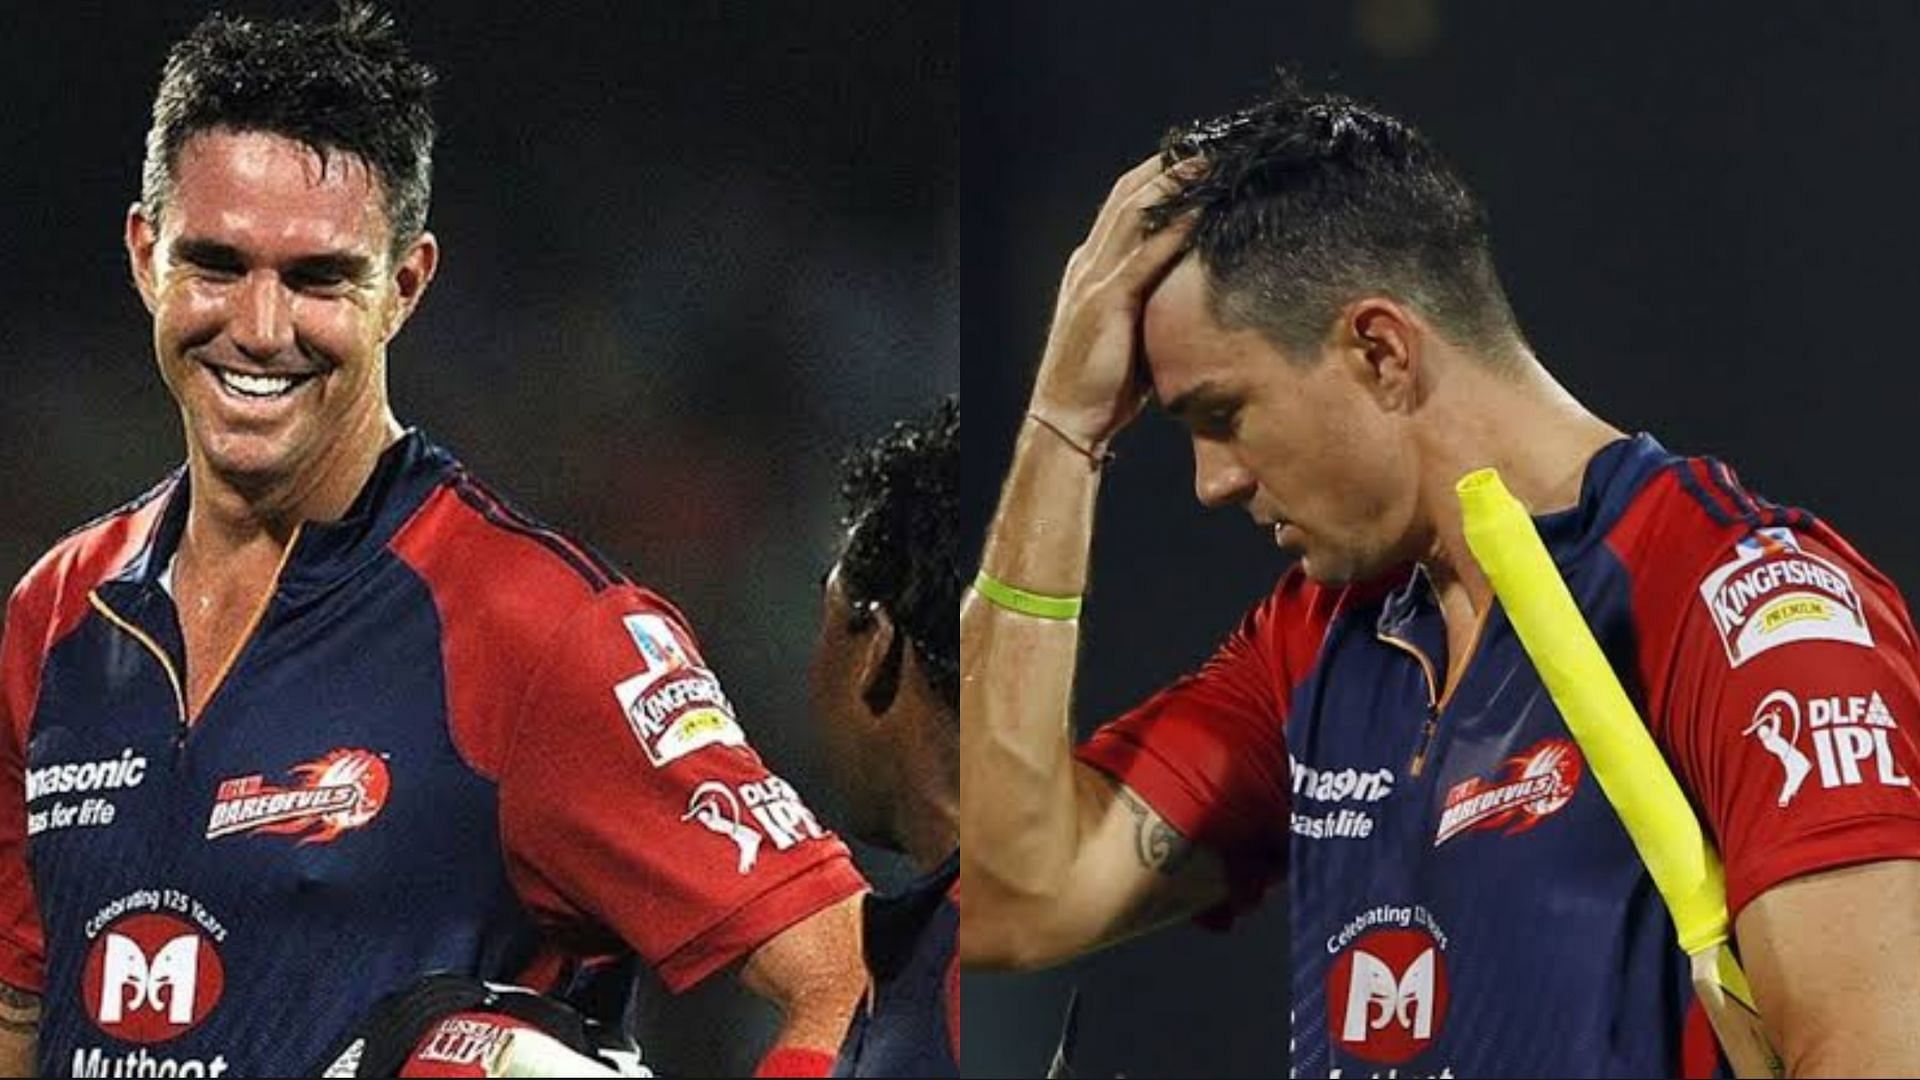 Kevin Pietersen failed as Delhi Capitals captain (Image: IPL)